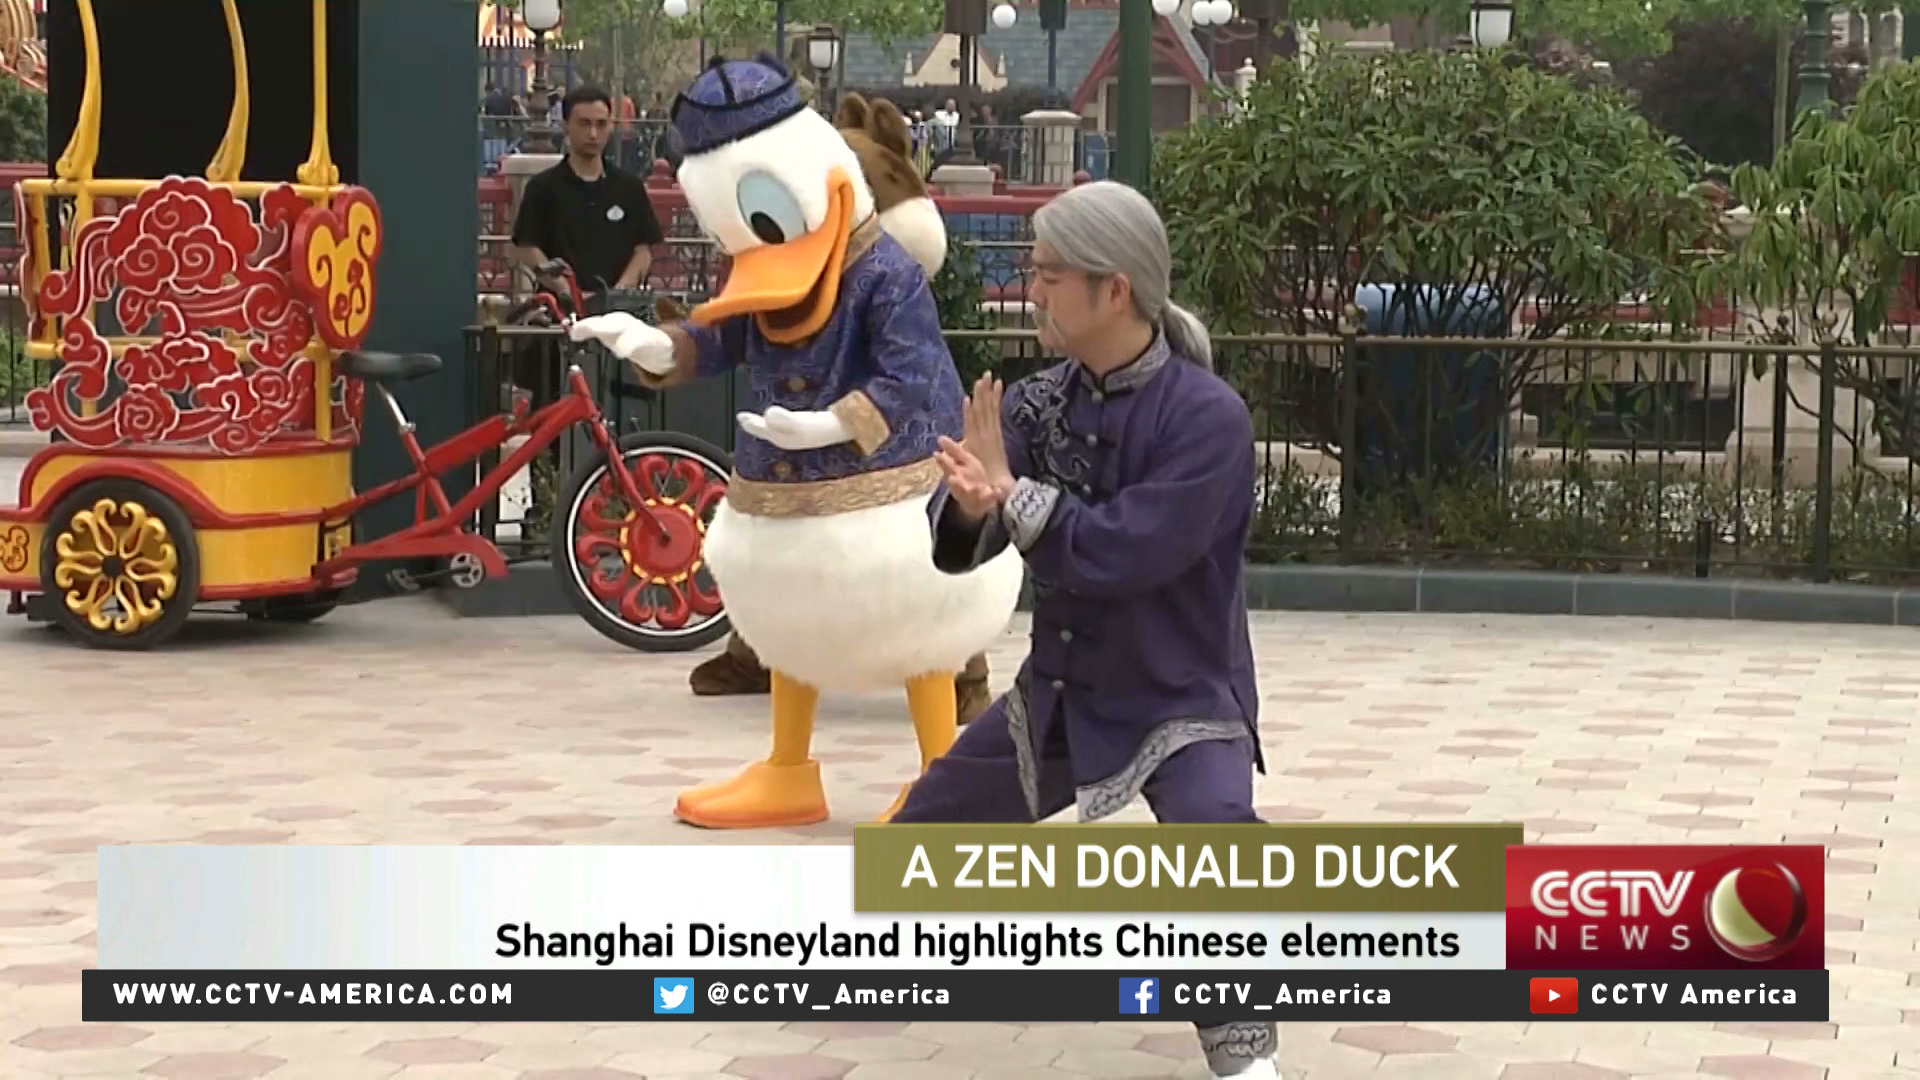 Shanghai Disneyland showcases Chinese influence throughout park